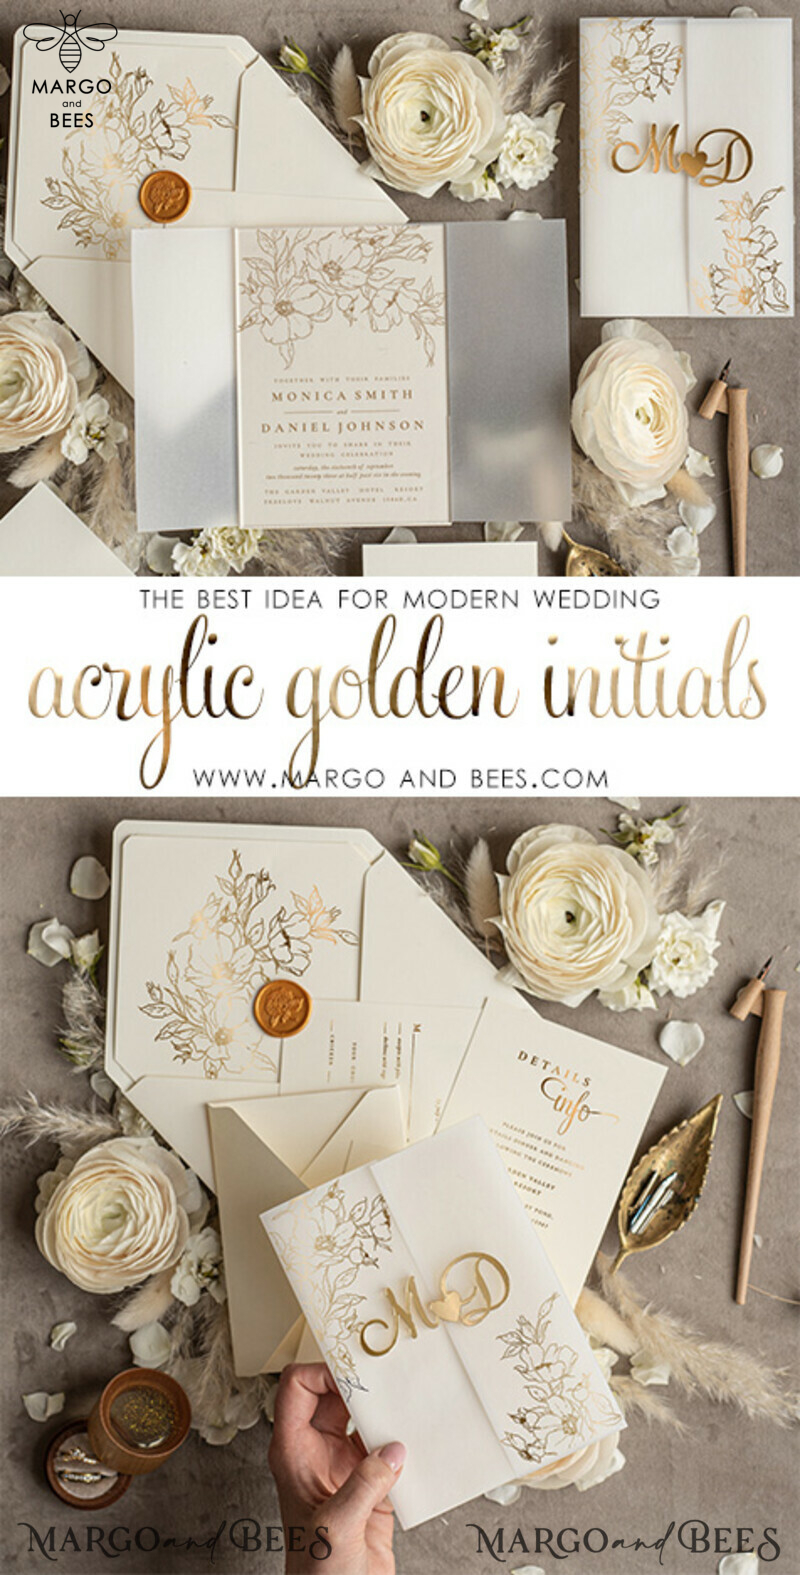 Luxory Wedding invitations handmade, Acrylic golden initials Wedding Invitations, Golden Shine Wedding Invitation Suite -2